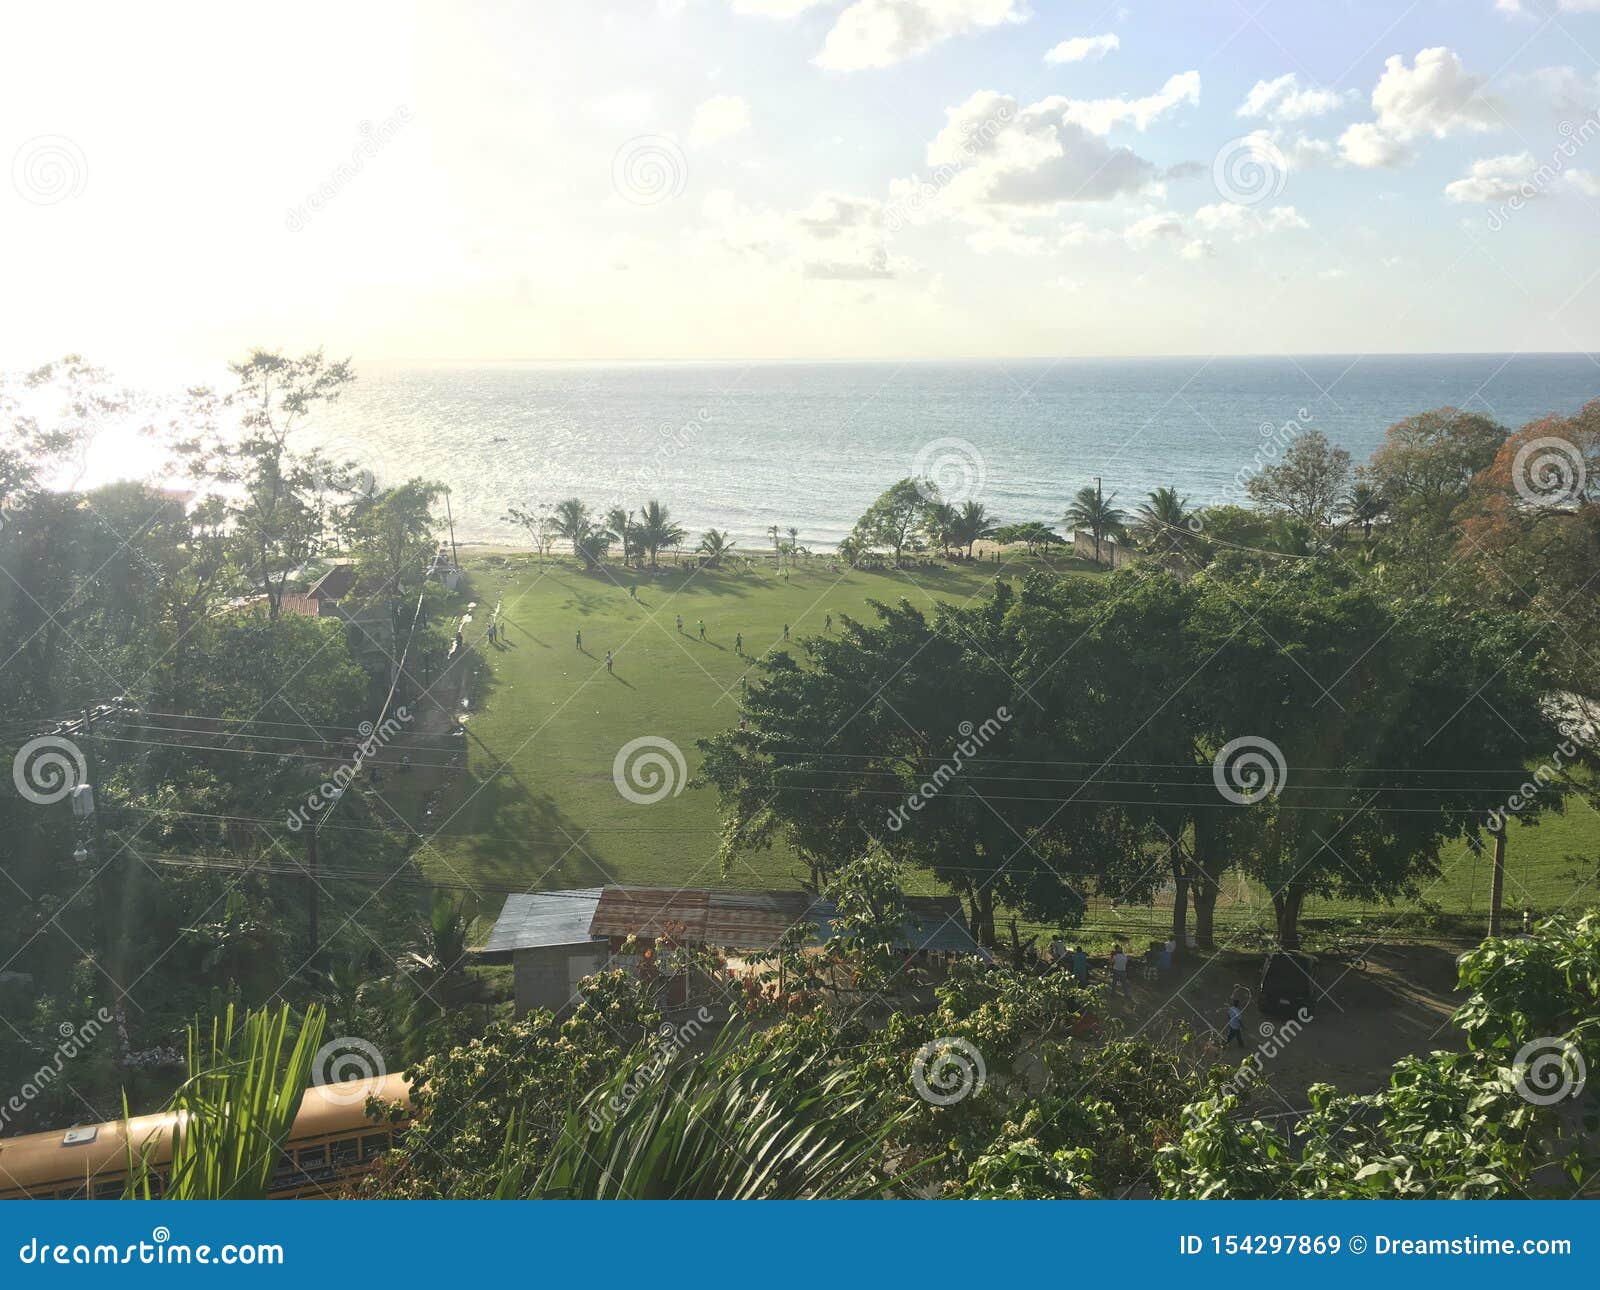 honduras landscape, mar, atlantico, caribe, nice, day, sunny, trees, clouds